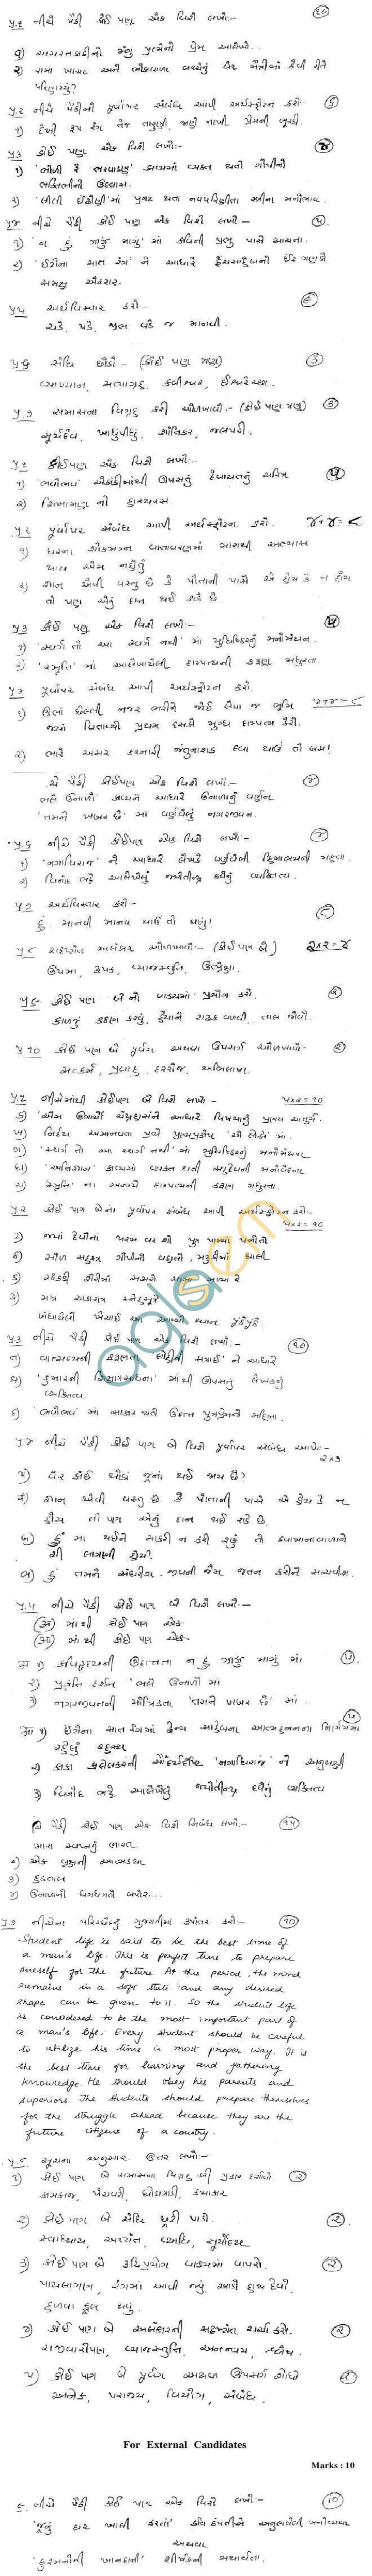 WB Board Sample Question Papers for Madhyamik Pariksha (Class 10) - Gujatarti